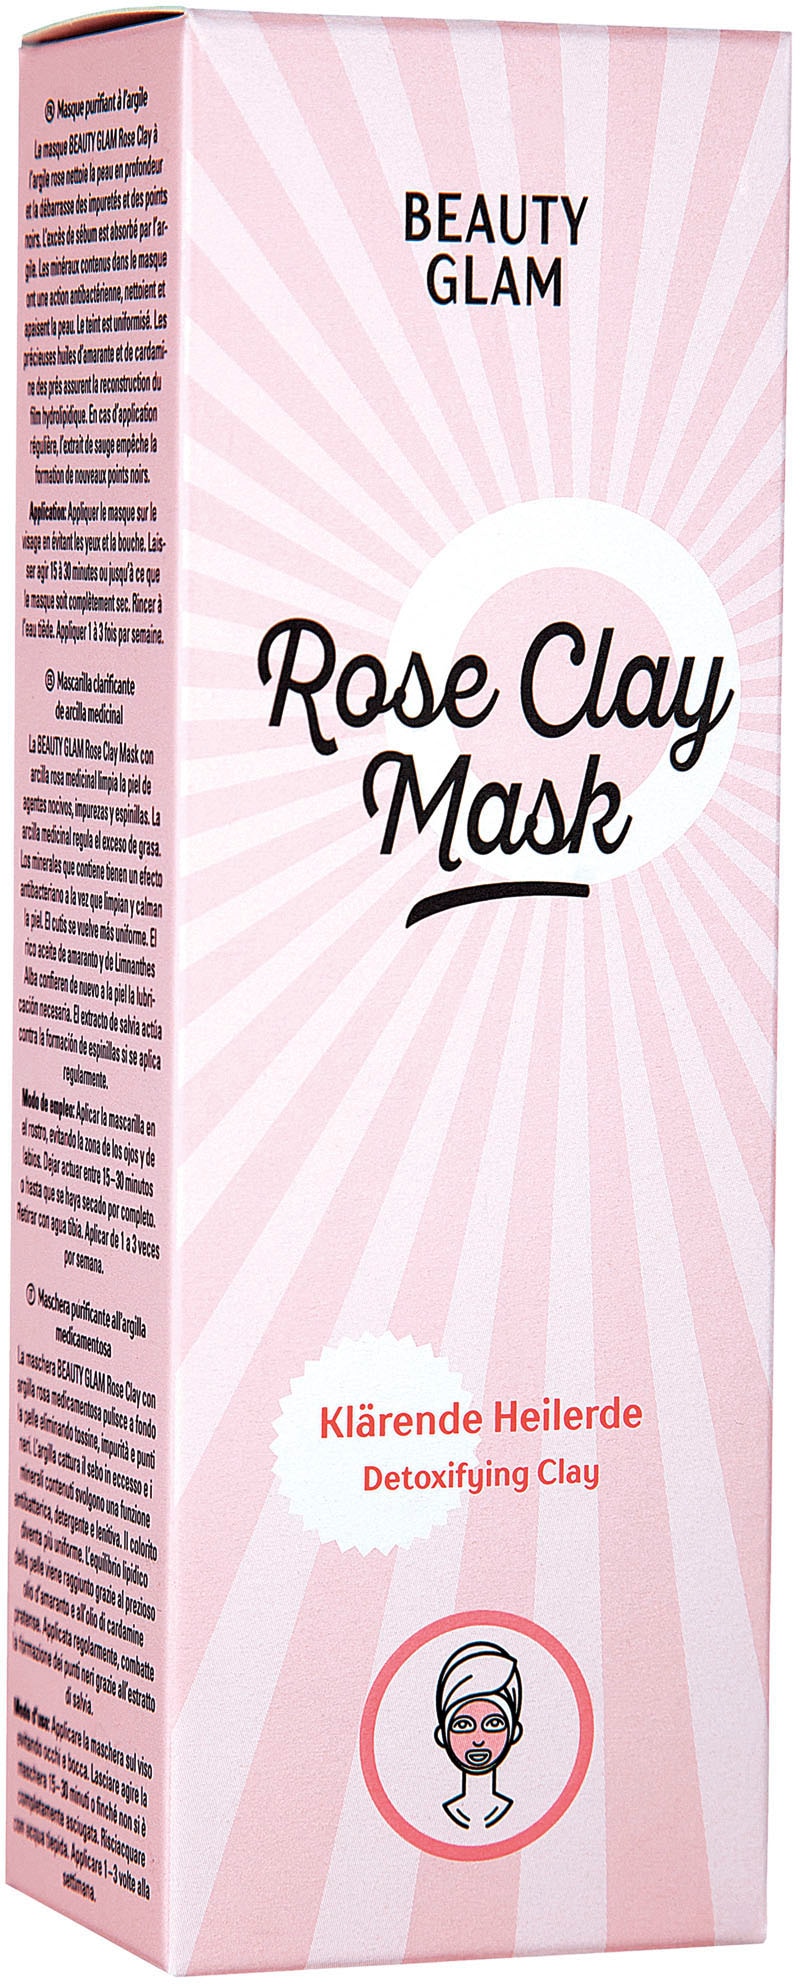 BEAUTY GLAM Gesichtsmasken-Set »Beauty Glam Ultimate Glow Mask«, (Set, 5  tlg.) kaufen